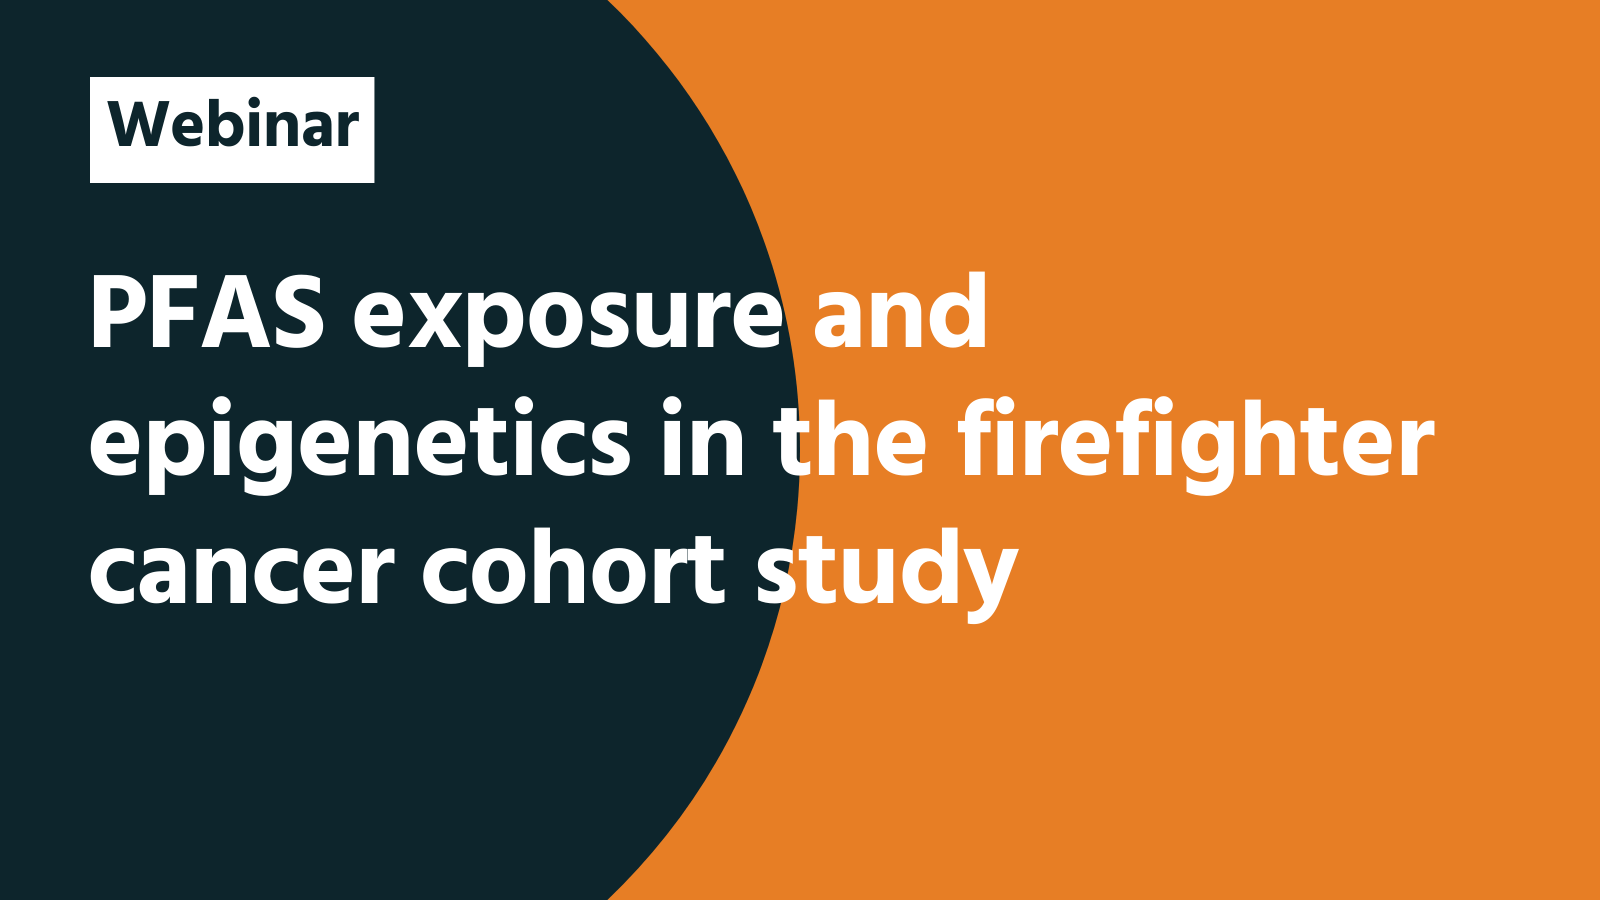 Webinar: PFAS exposure and epigenetics in the firefighter cancer cohort study